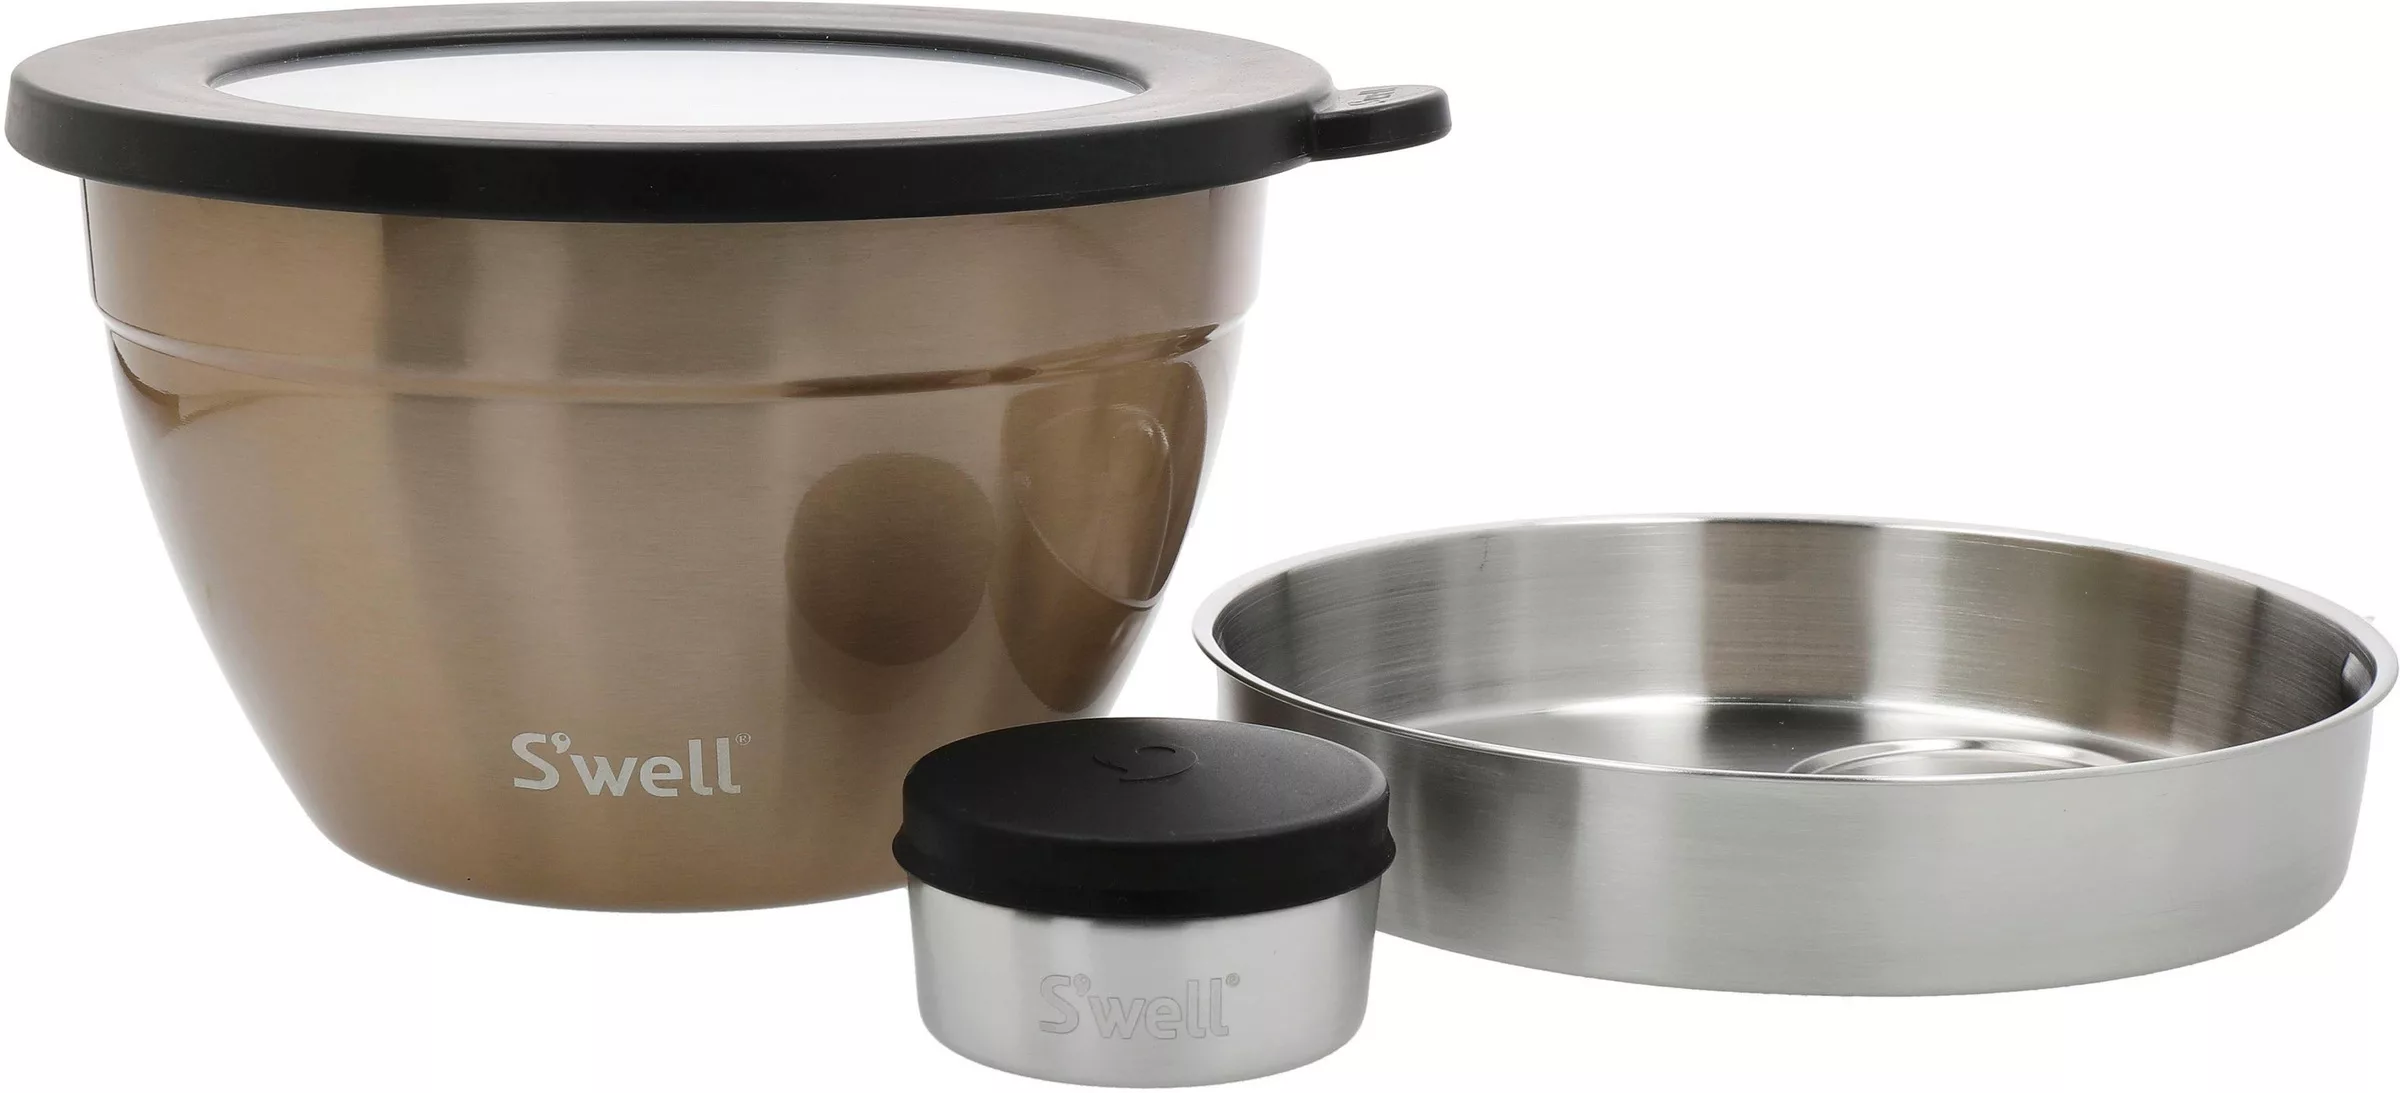 S'well Salatschüssel »S'well Calacatta Gold Salad Bowl Kit, 1.9L«, 3 tlg., günstig online kaufen